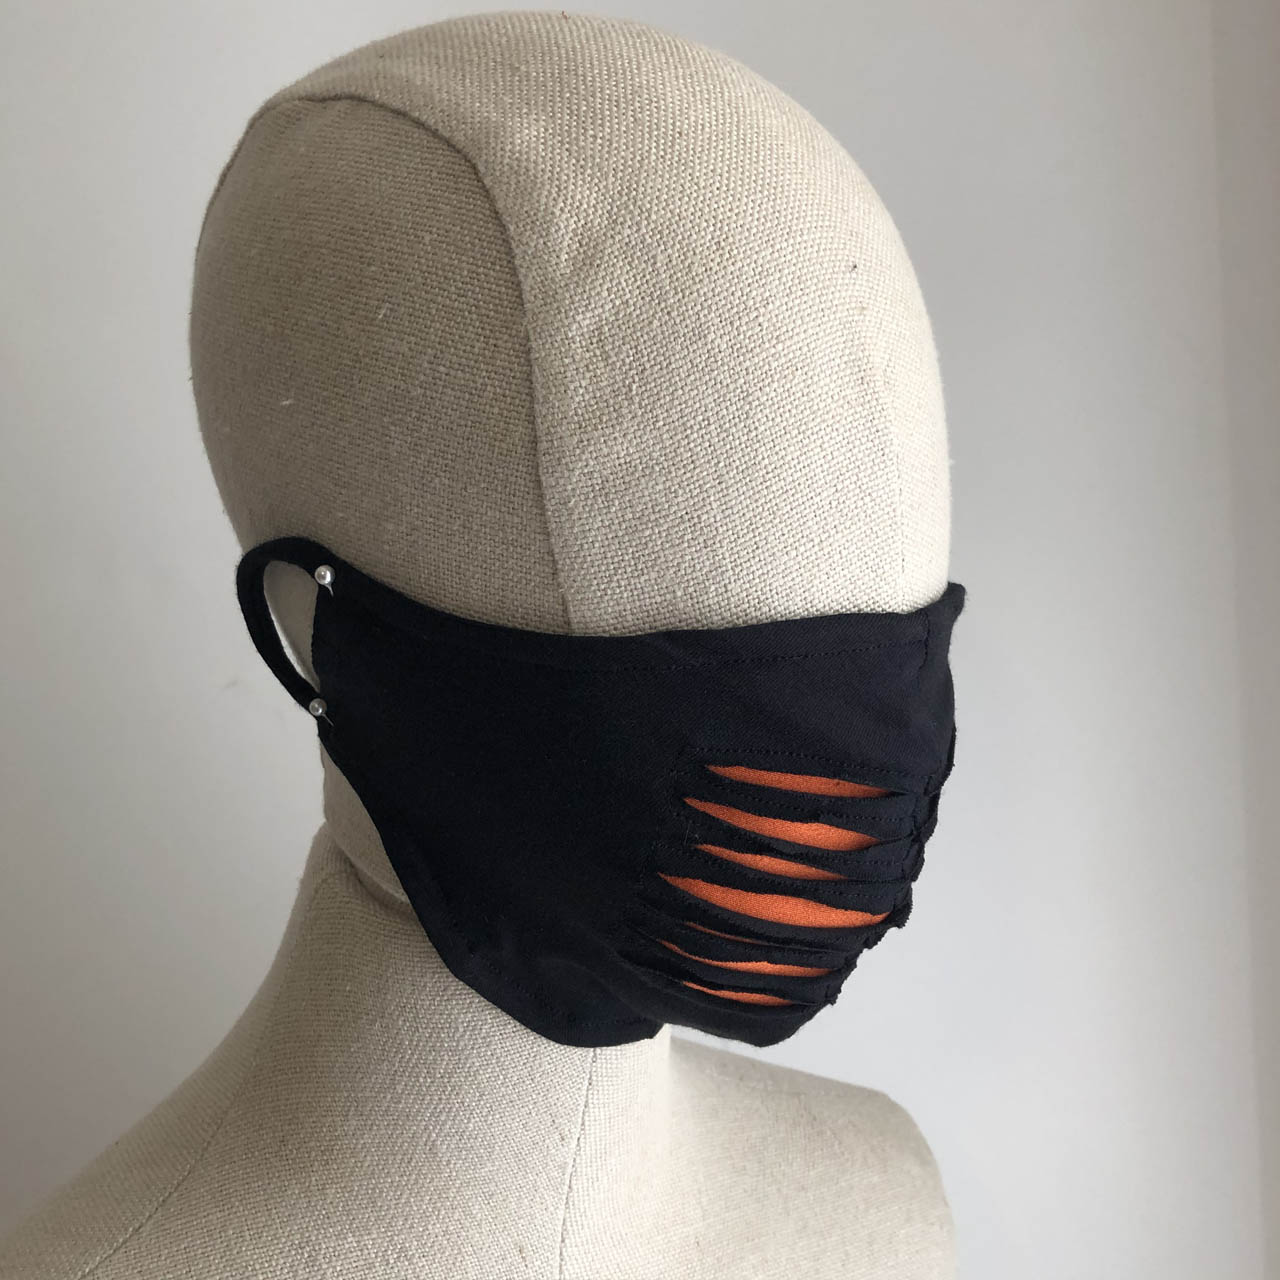 black mask - Grill design - $15 AUD plus post